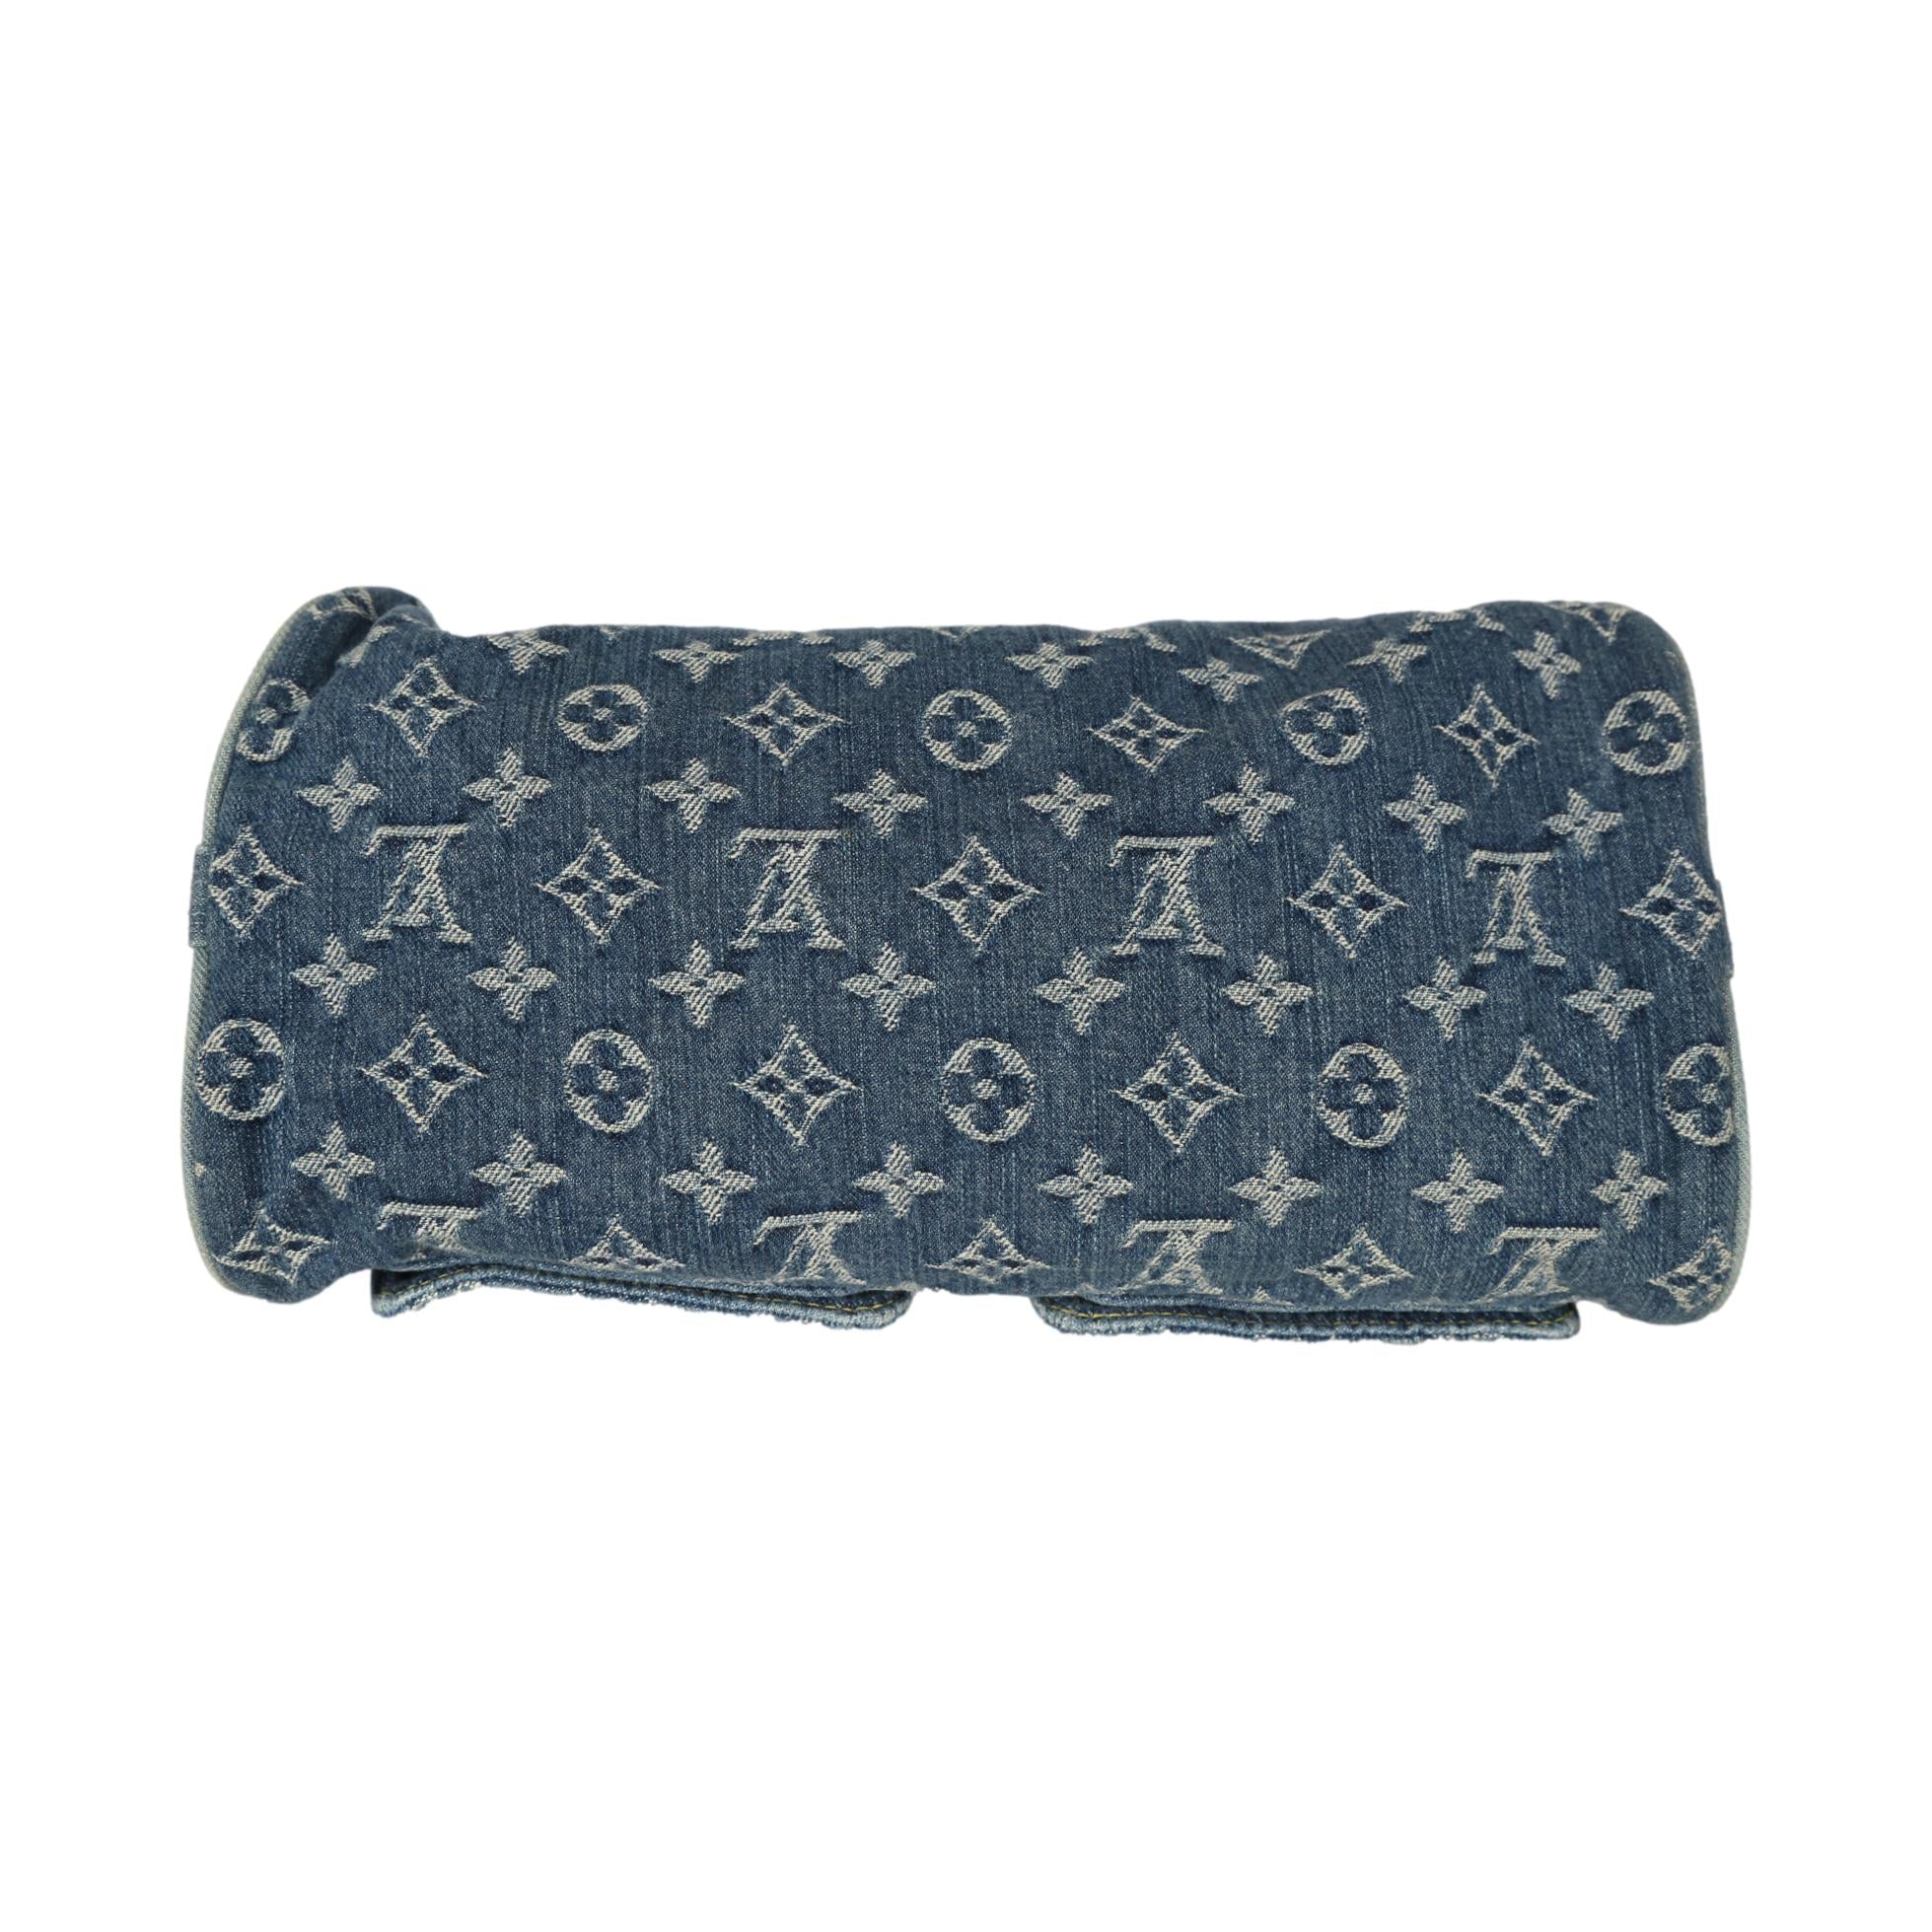 Louis Vuitton Denim Monogram Speedy Bag